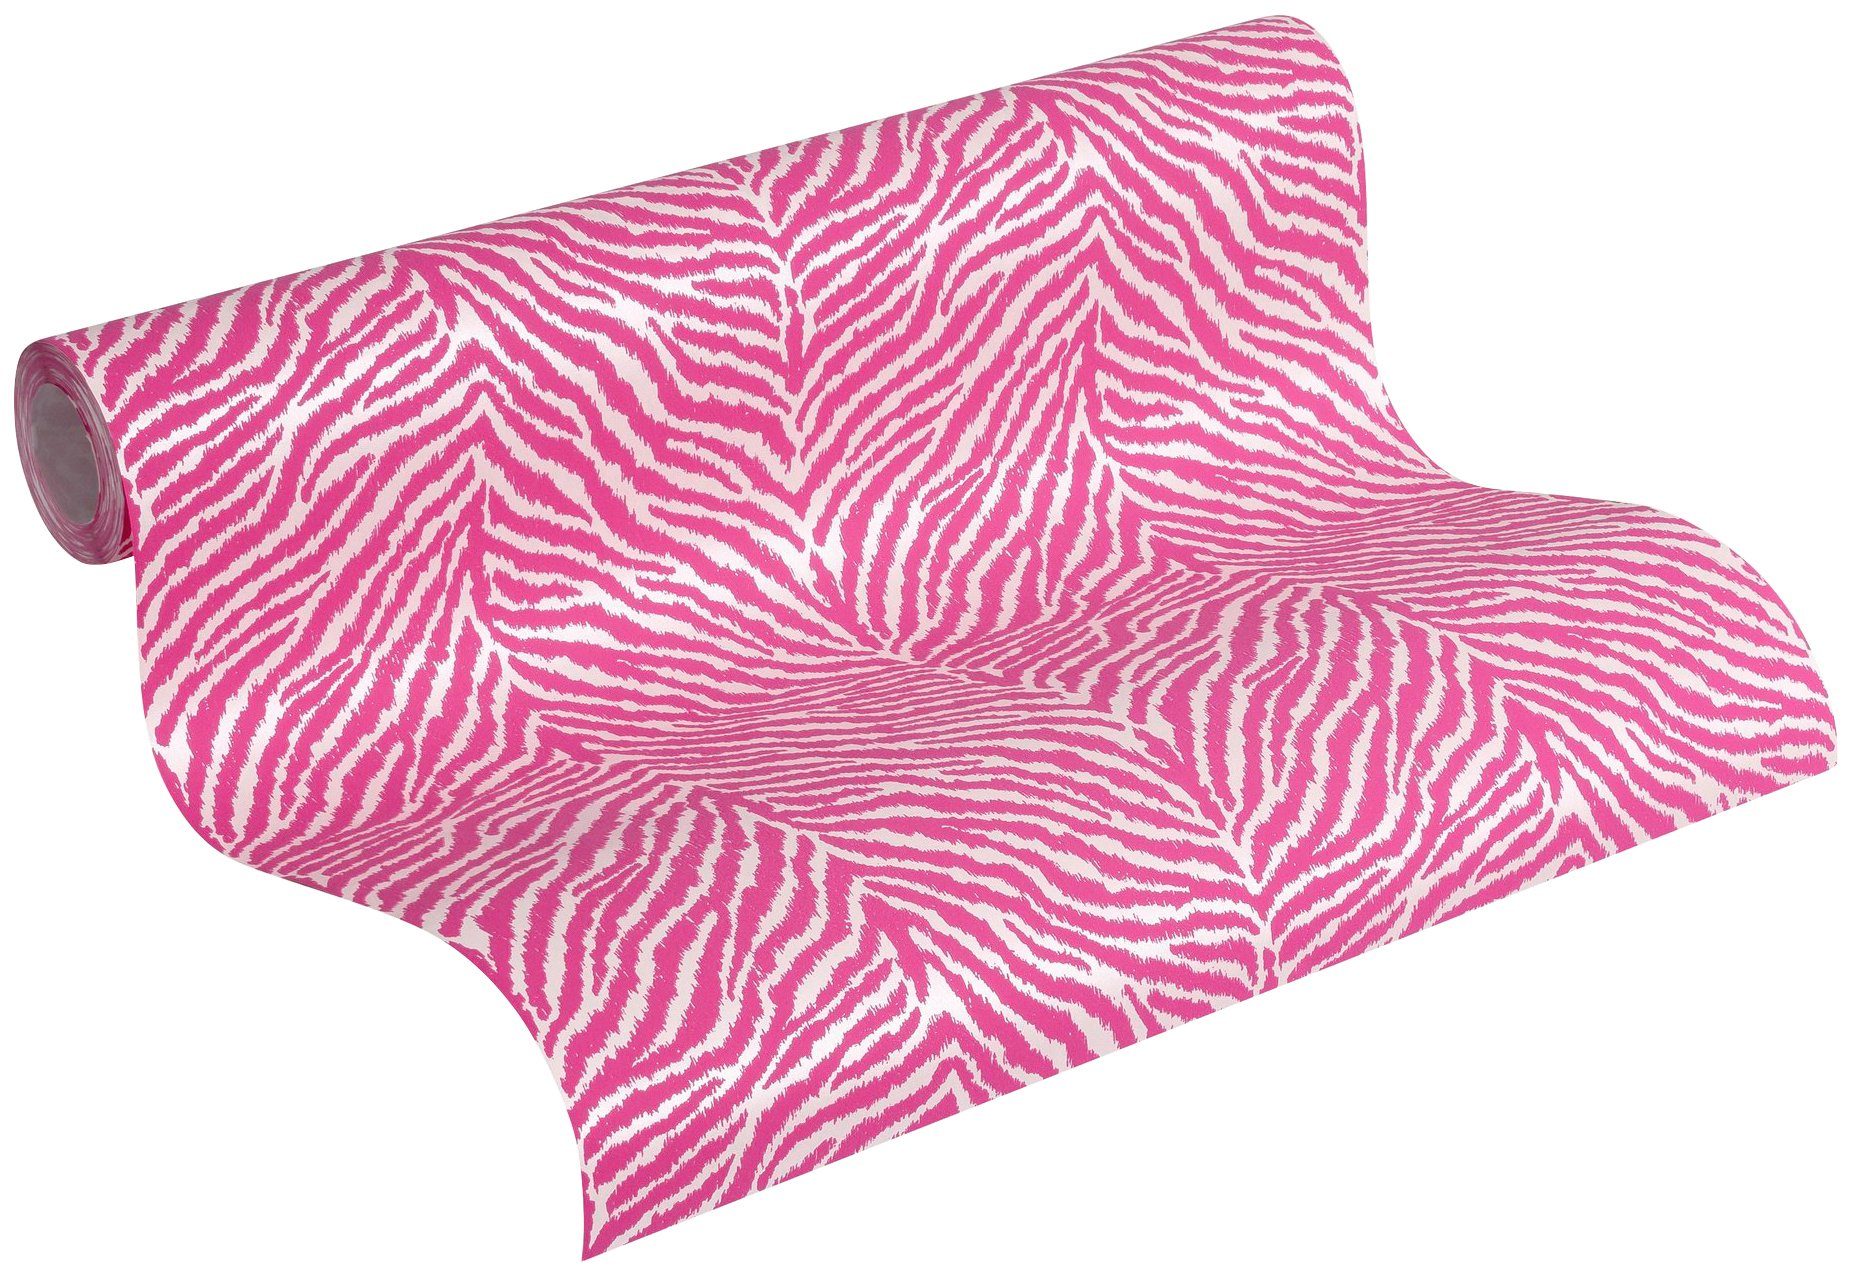 Zebra Print, rosa Tapete A.S. Trendwall print, animal im Création Vliestapete Tiere strukturiert,